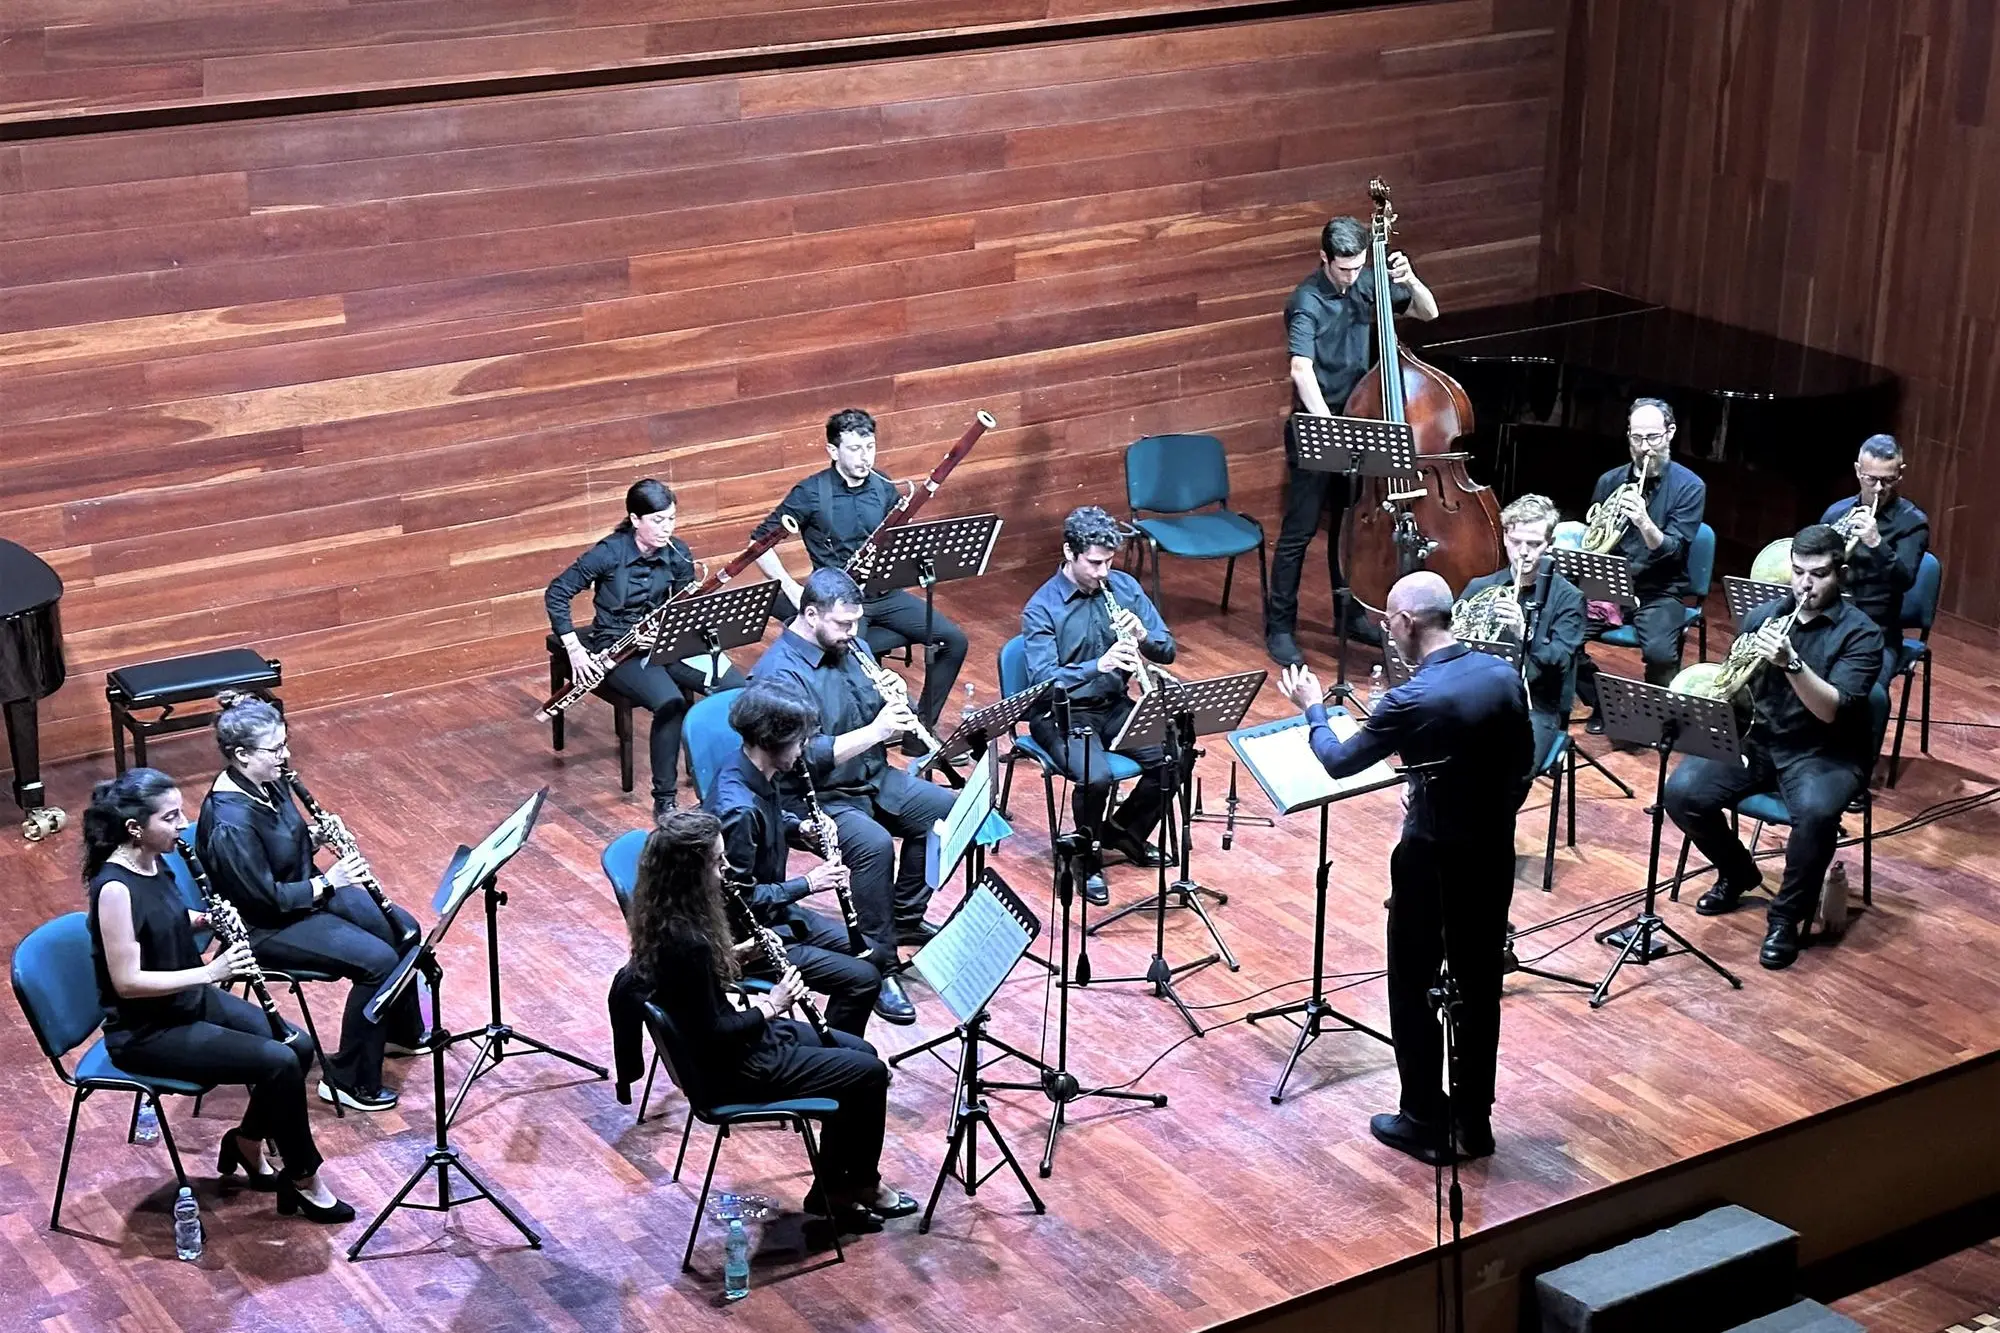 Un concerto nella sala Sassu del Conservatorio (foto concessa)